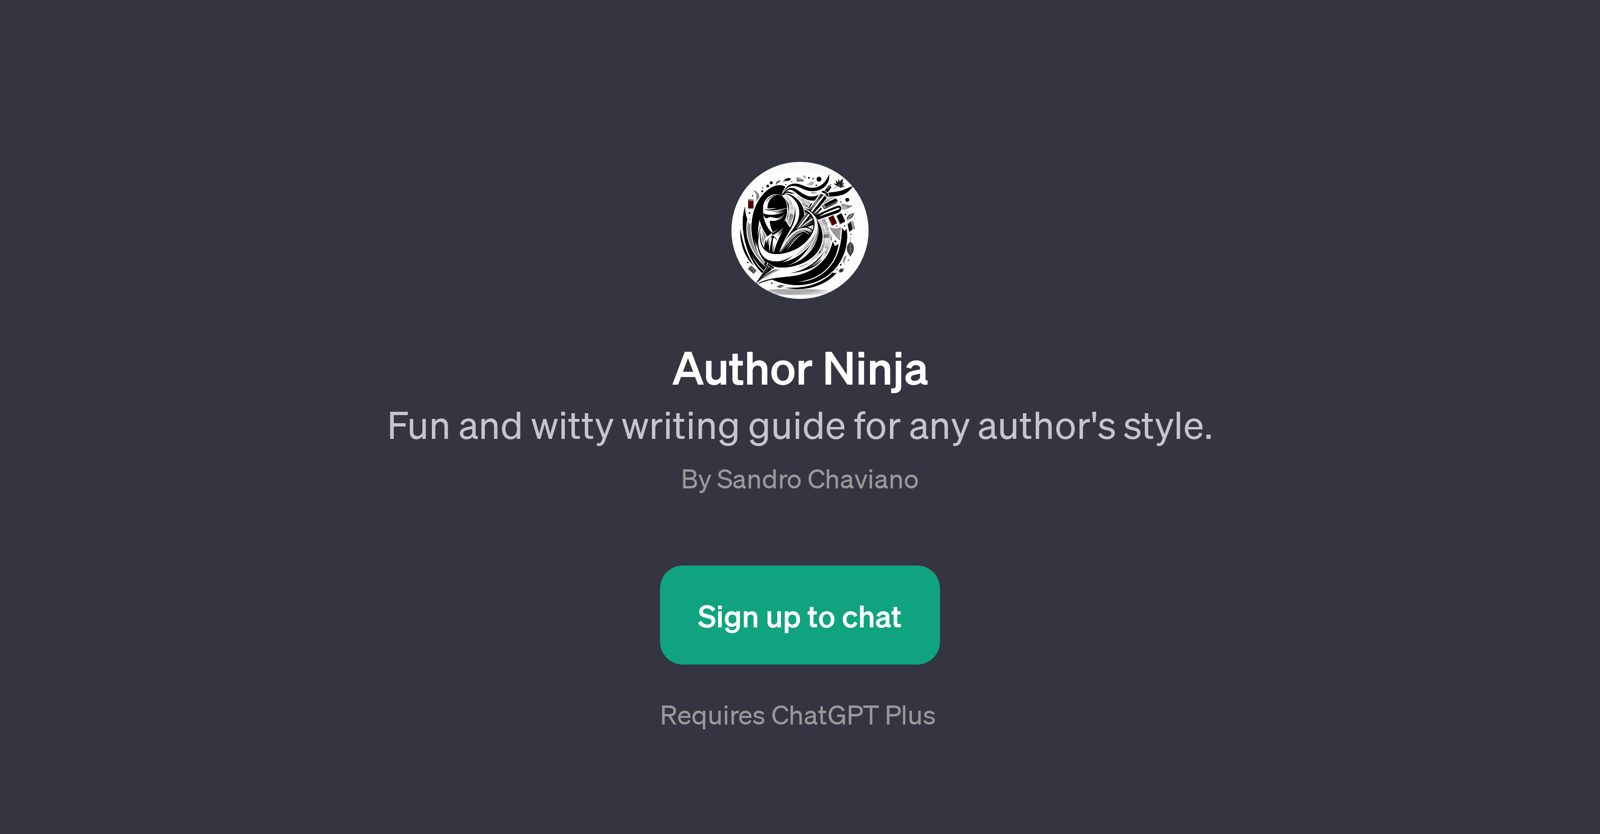 Author Ninja website